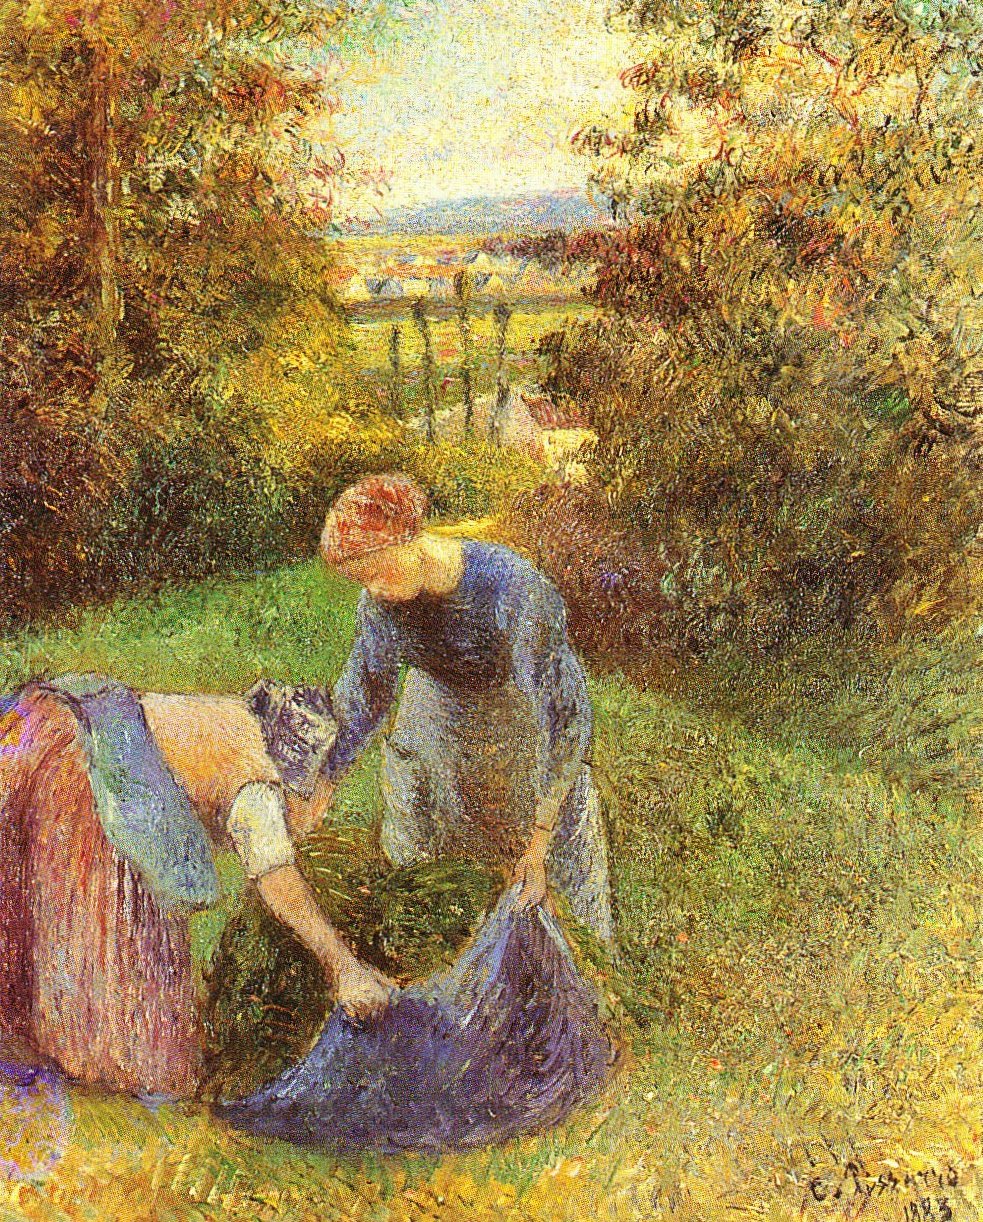 Camille+Pissarro-1830-1903 (201).jpg